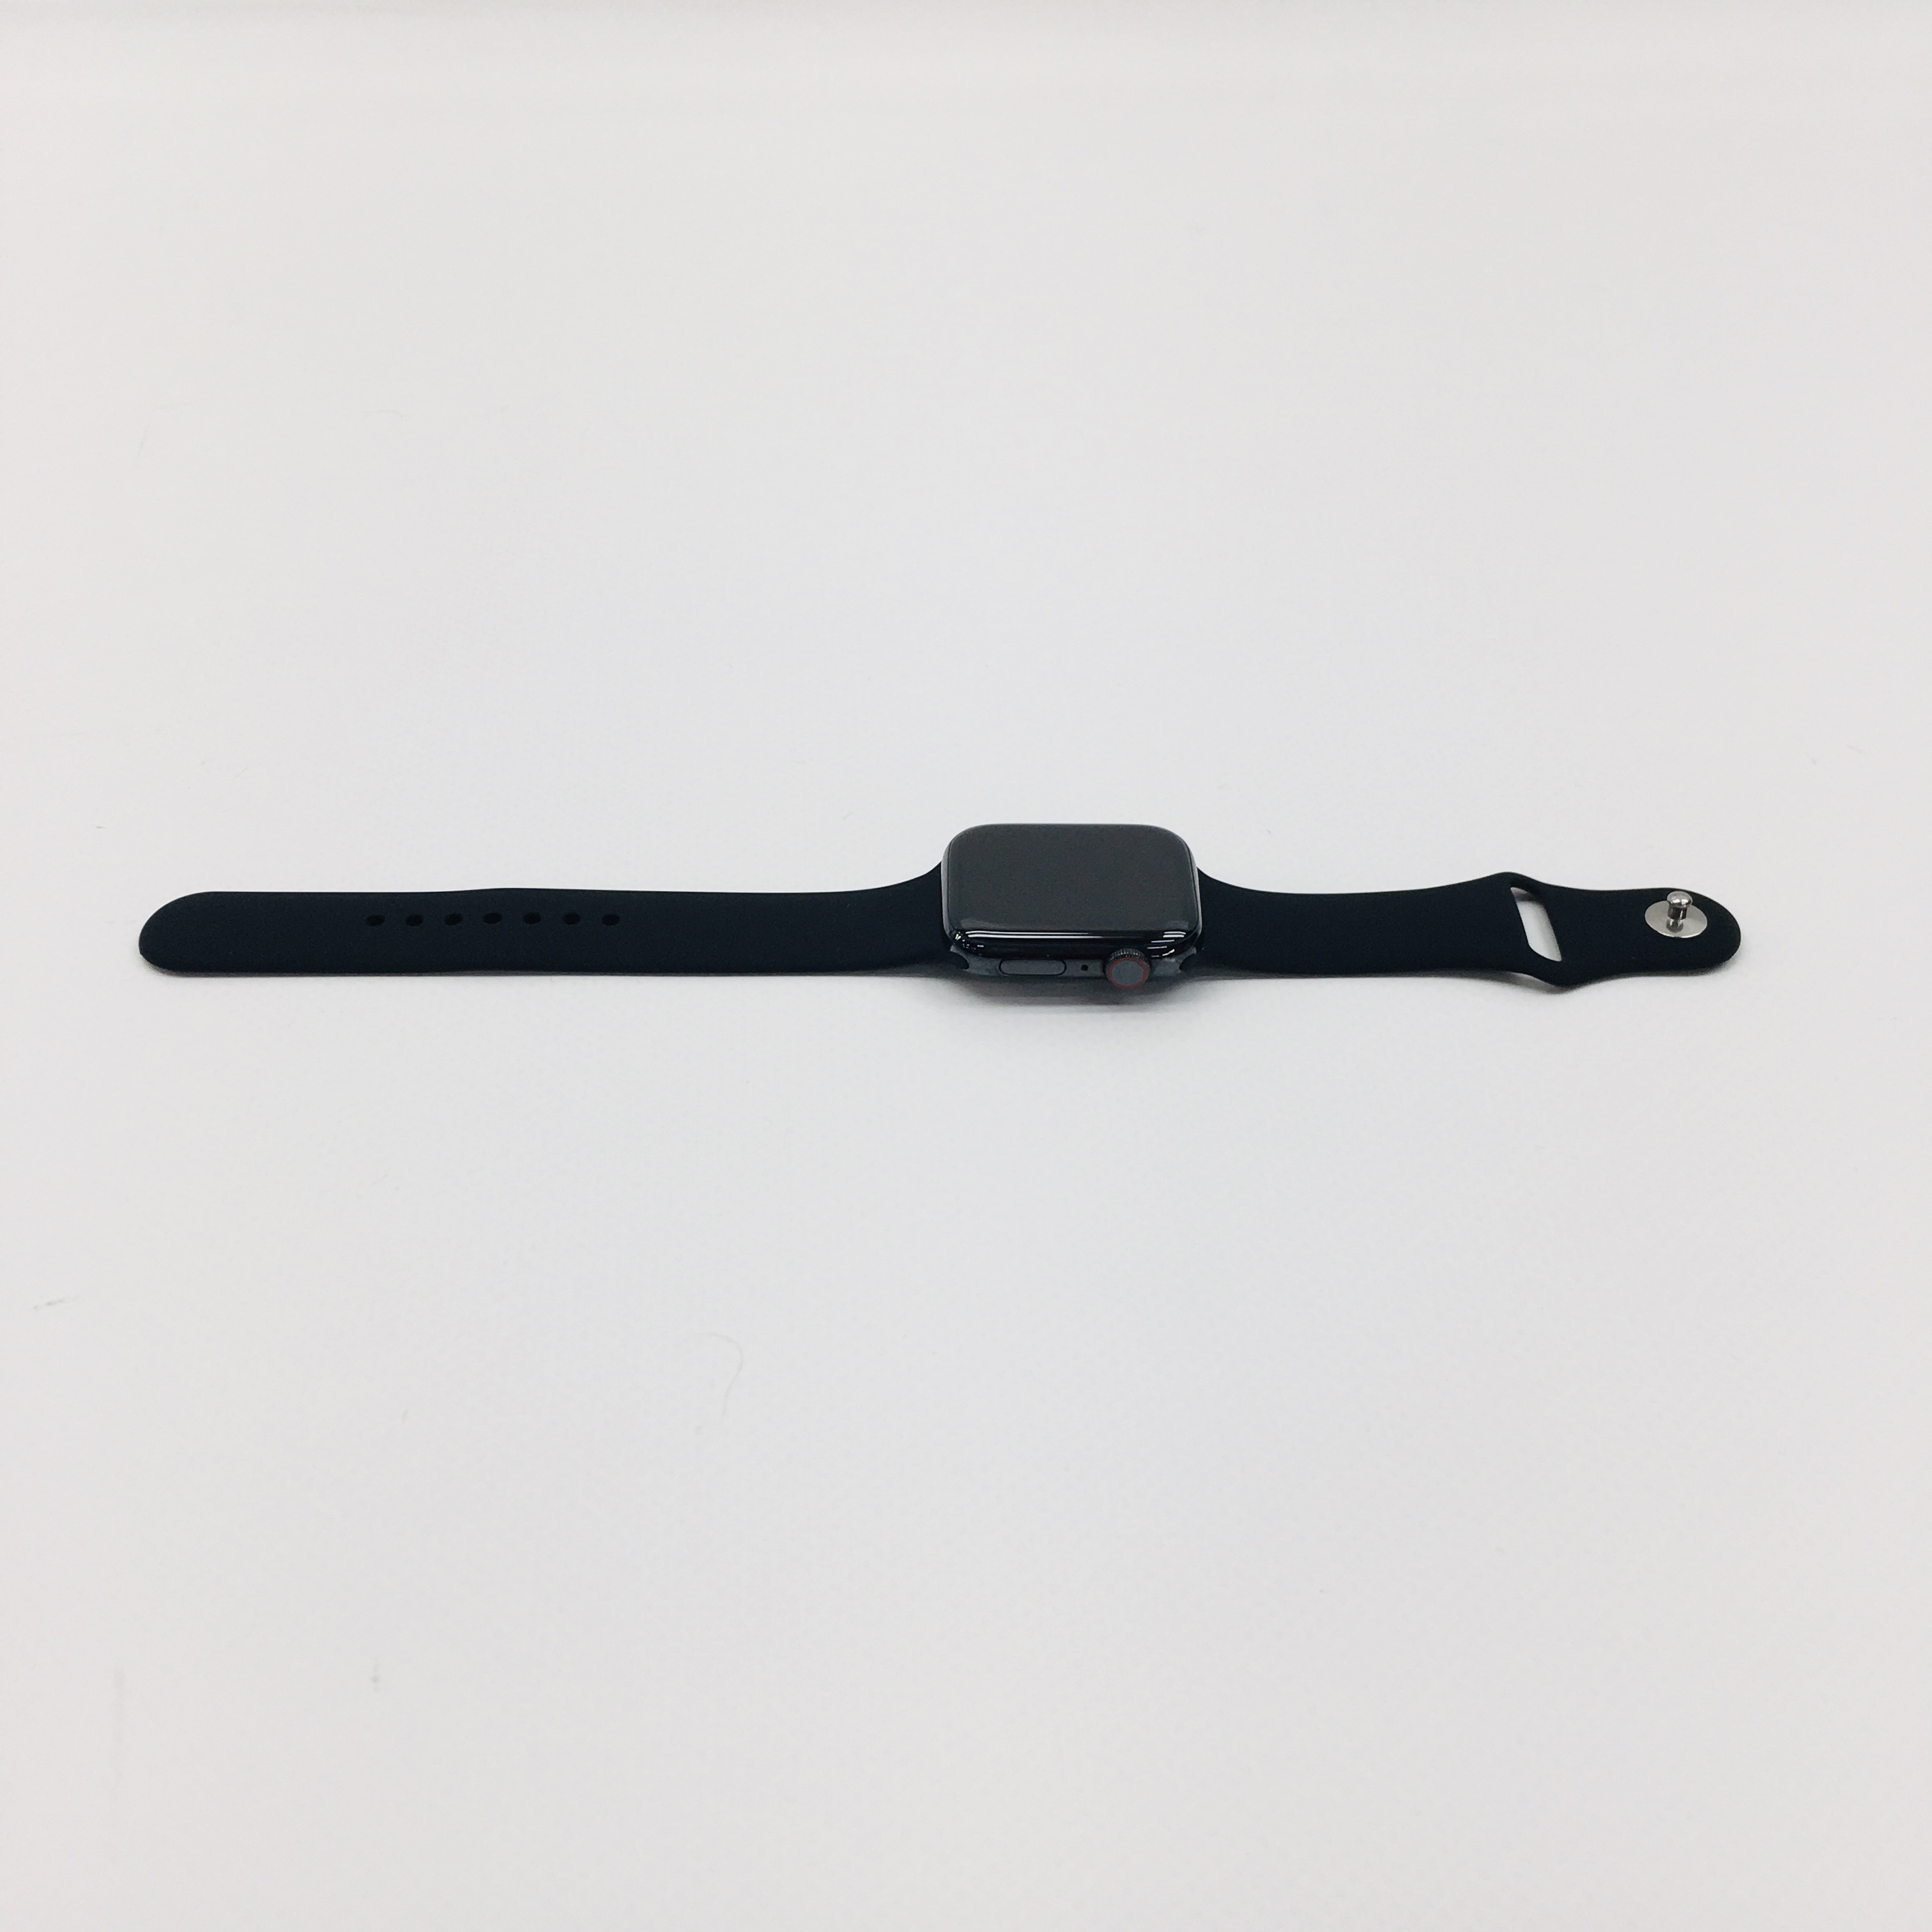 Watch Series 5 Steel Cellular (44mm), Space Black, image 2